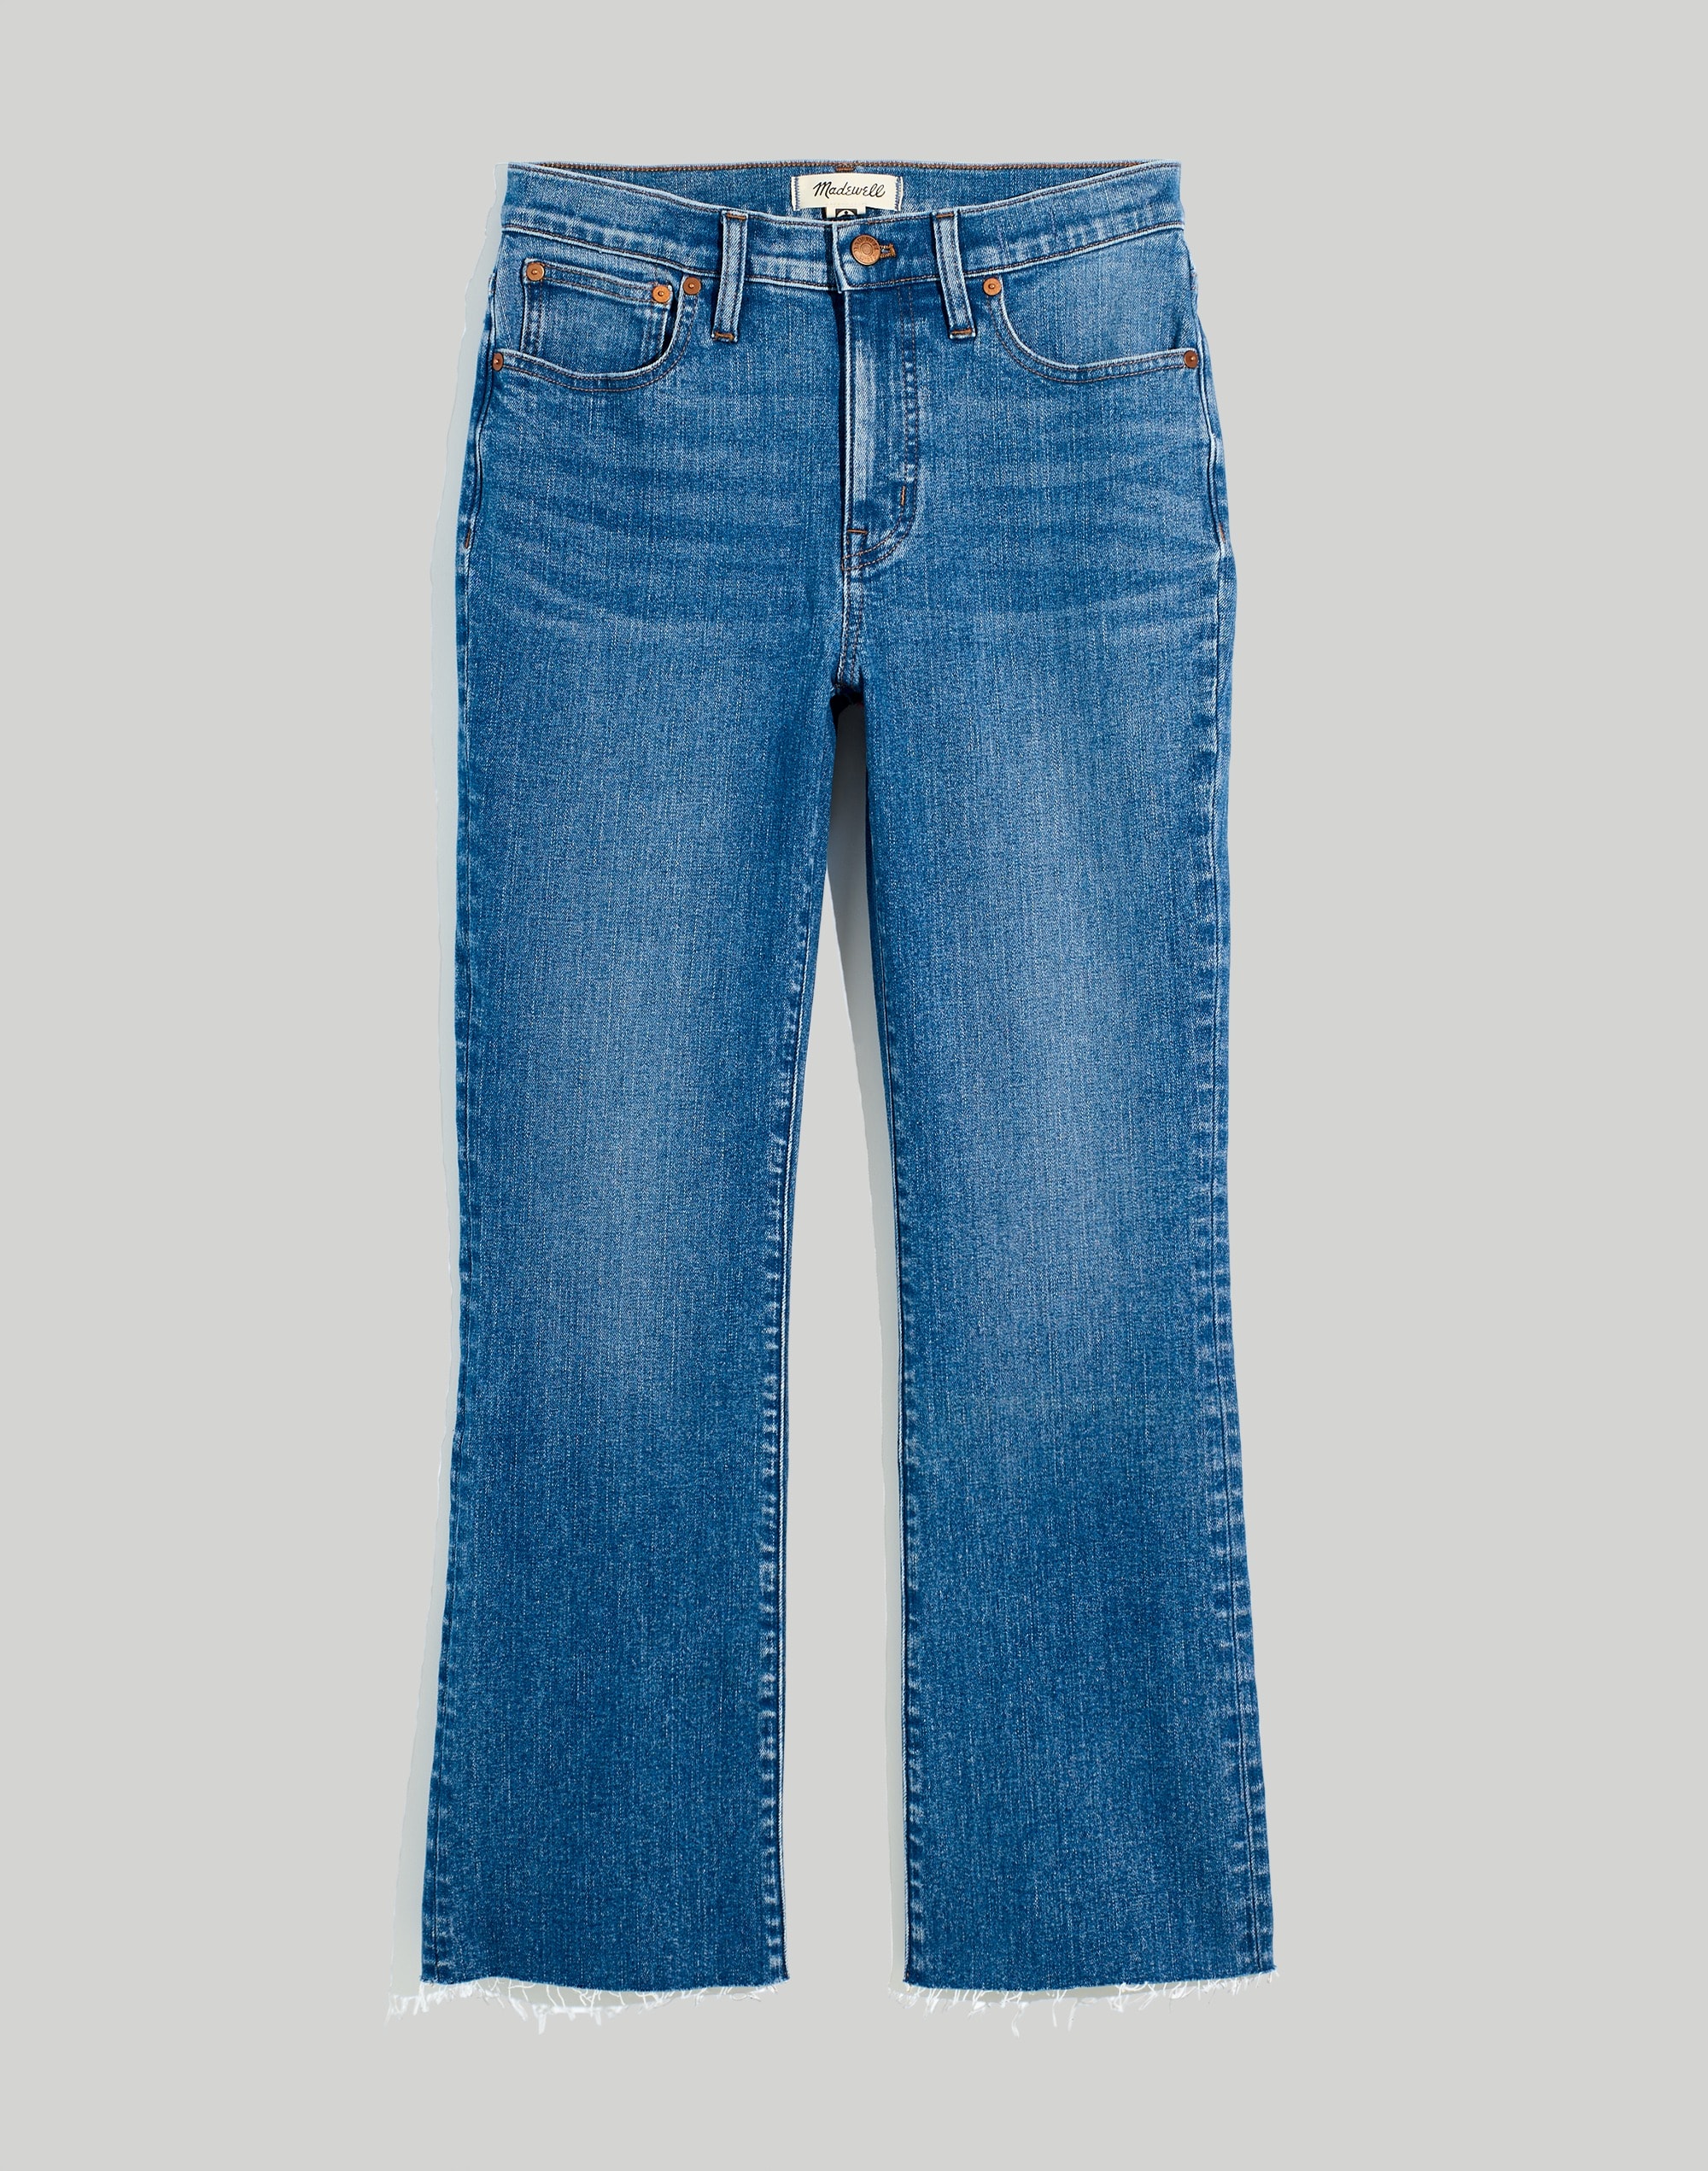 Taller Kick Out Crop Jeans Cherryville Wash: Raw-Hem Edition